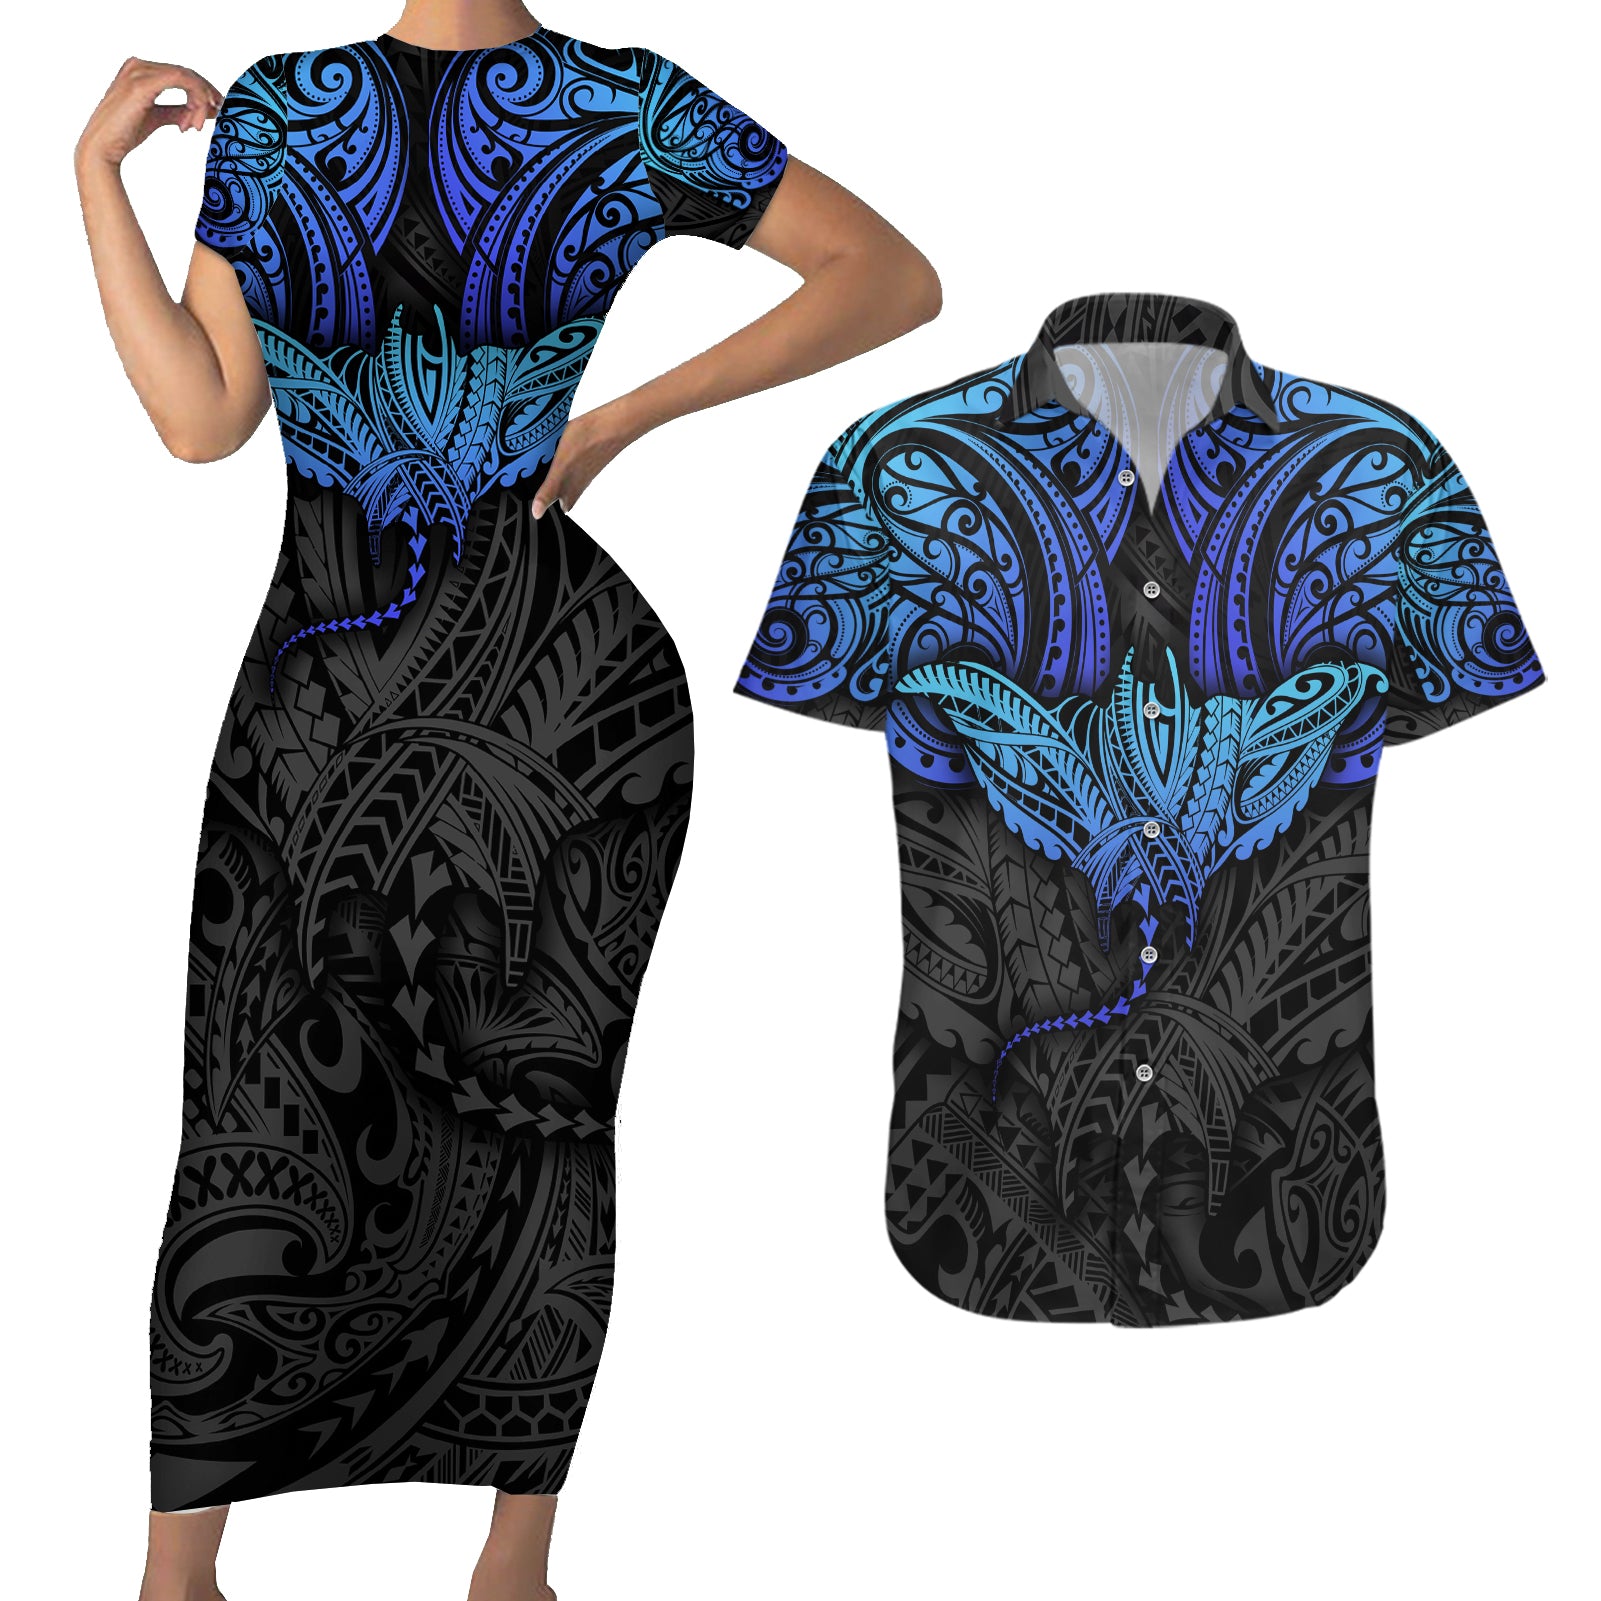 Polynesian Ray Pattern Couples Matching Short Sleeve Bodycon Dress and Hawaiian Shirt TS04 Black/Blue - Polynesian Pride